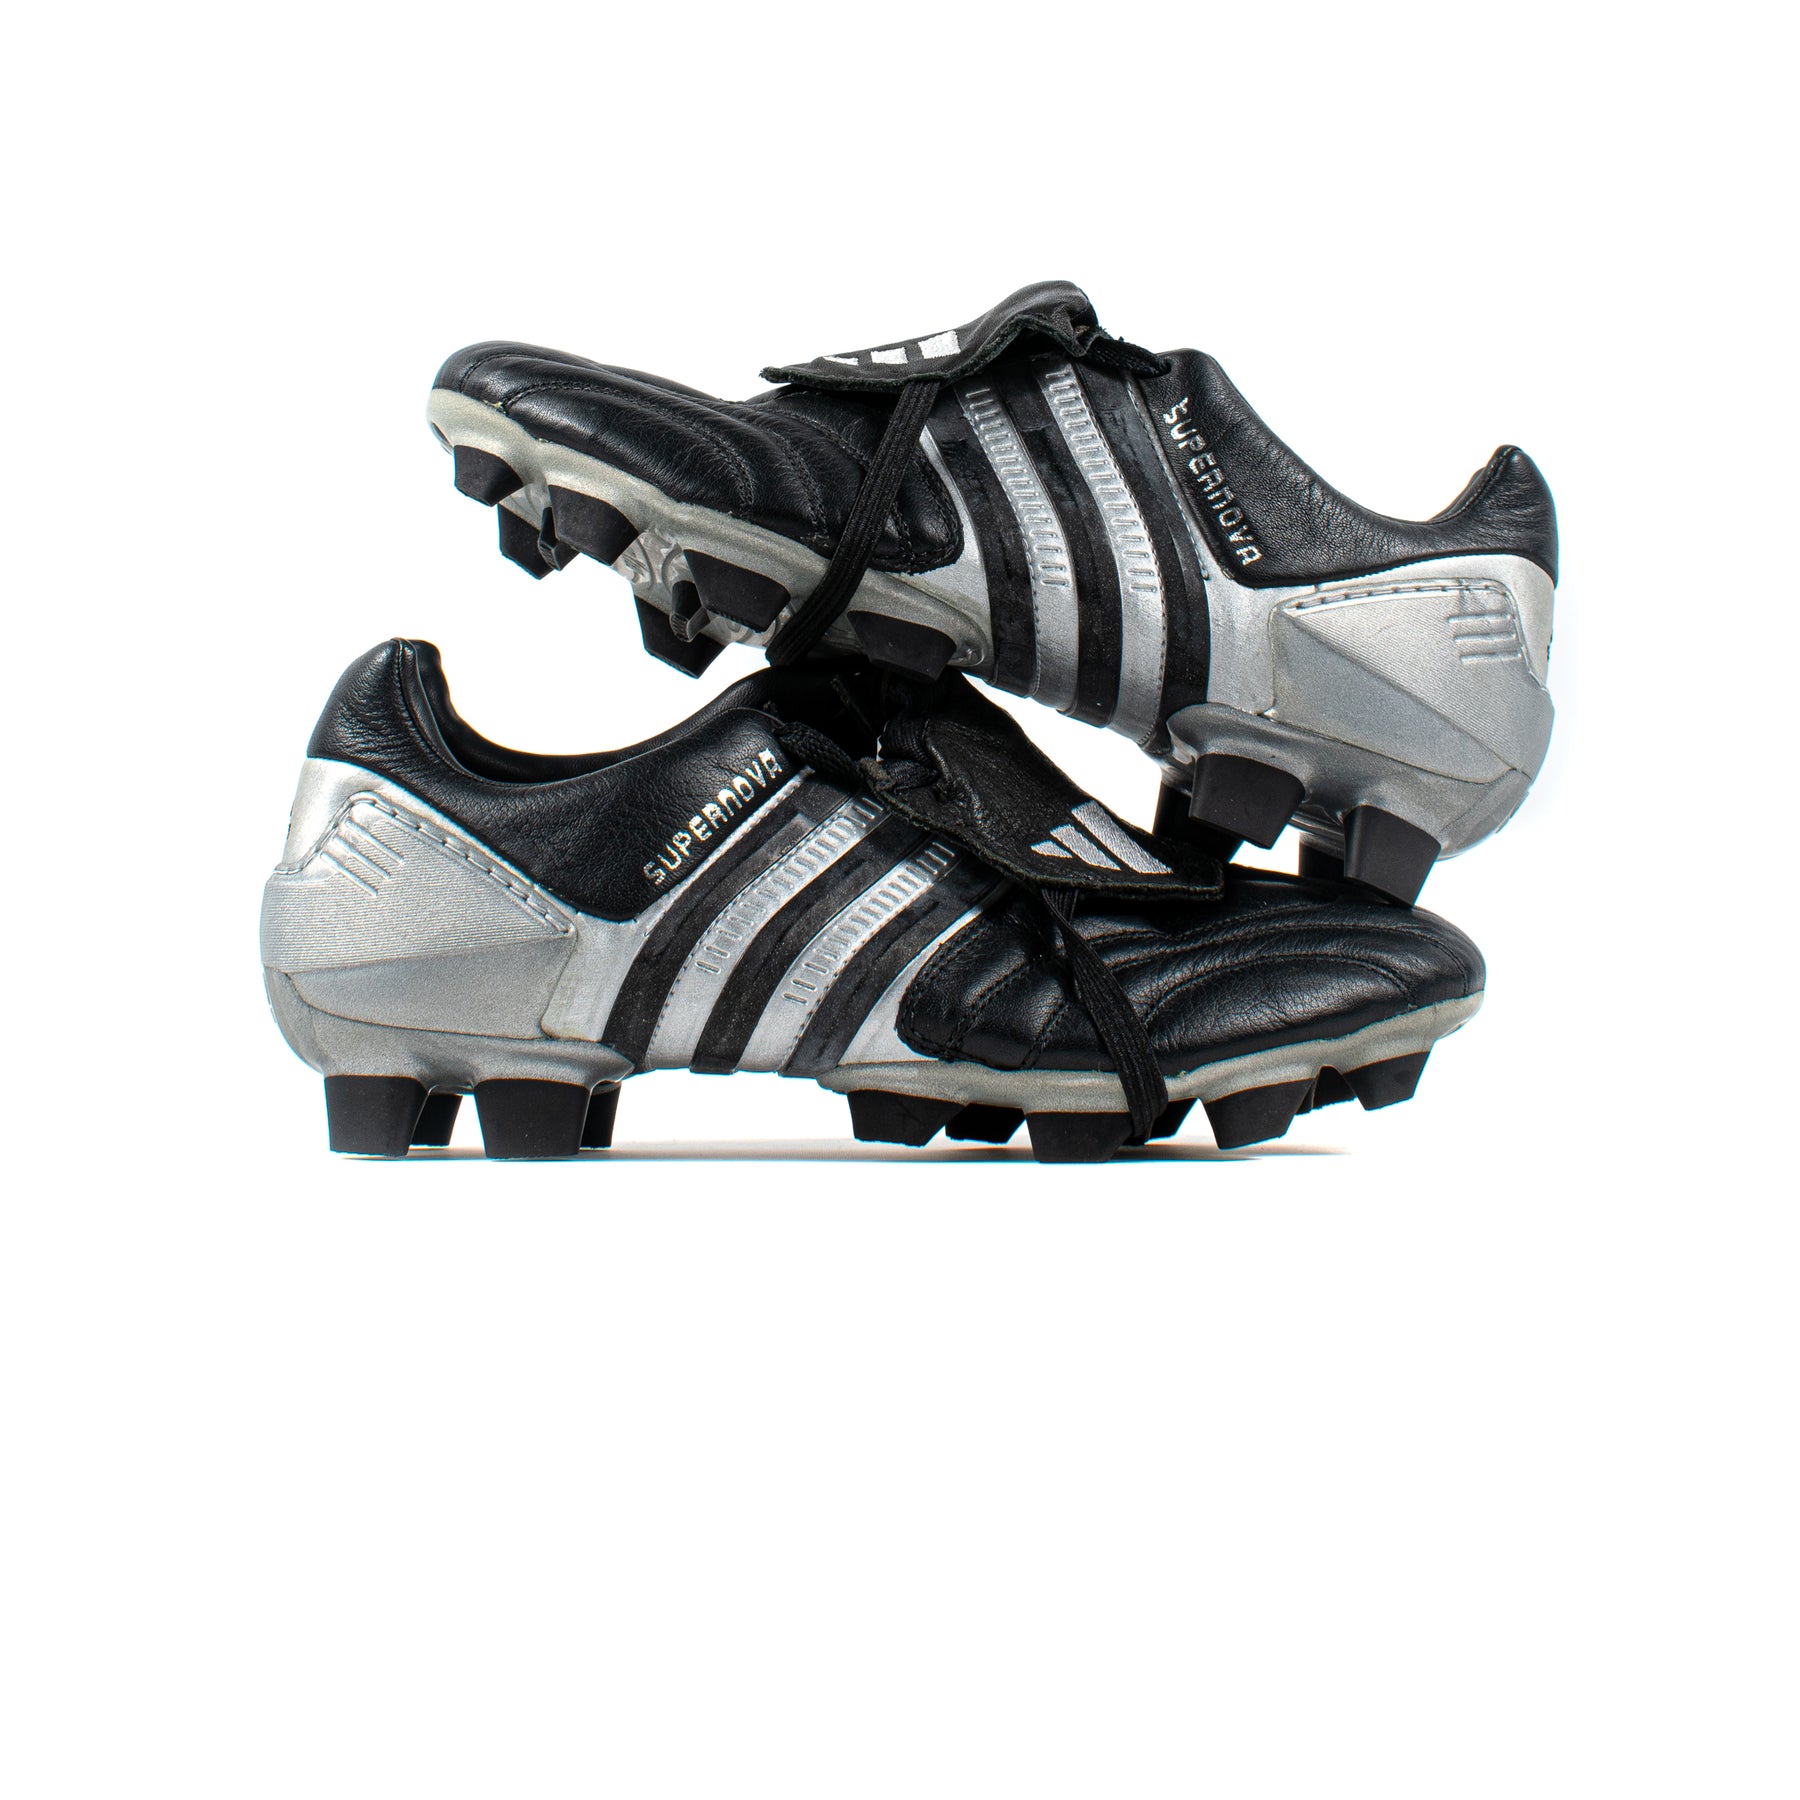 Adidas Supernova Black Classic Cleats